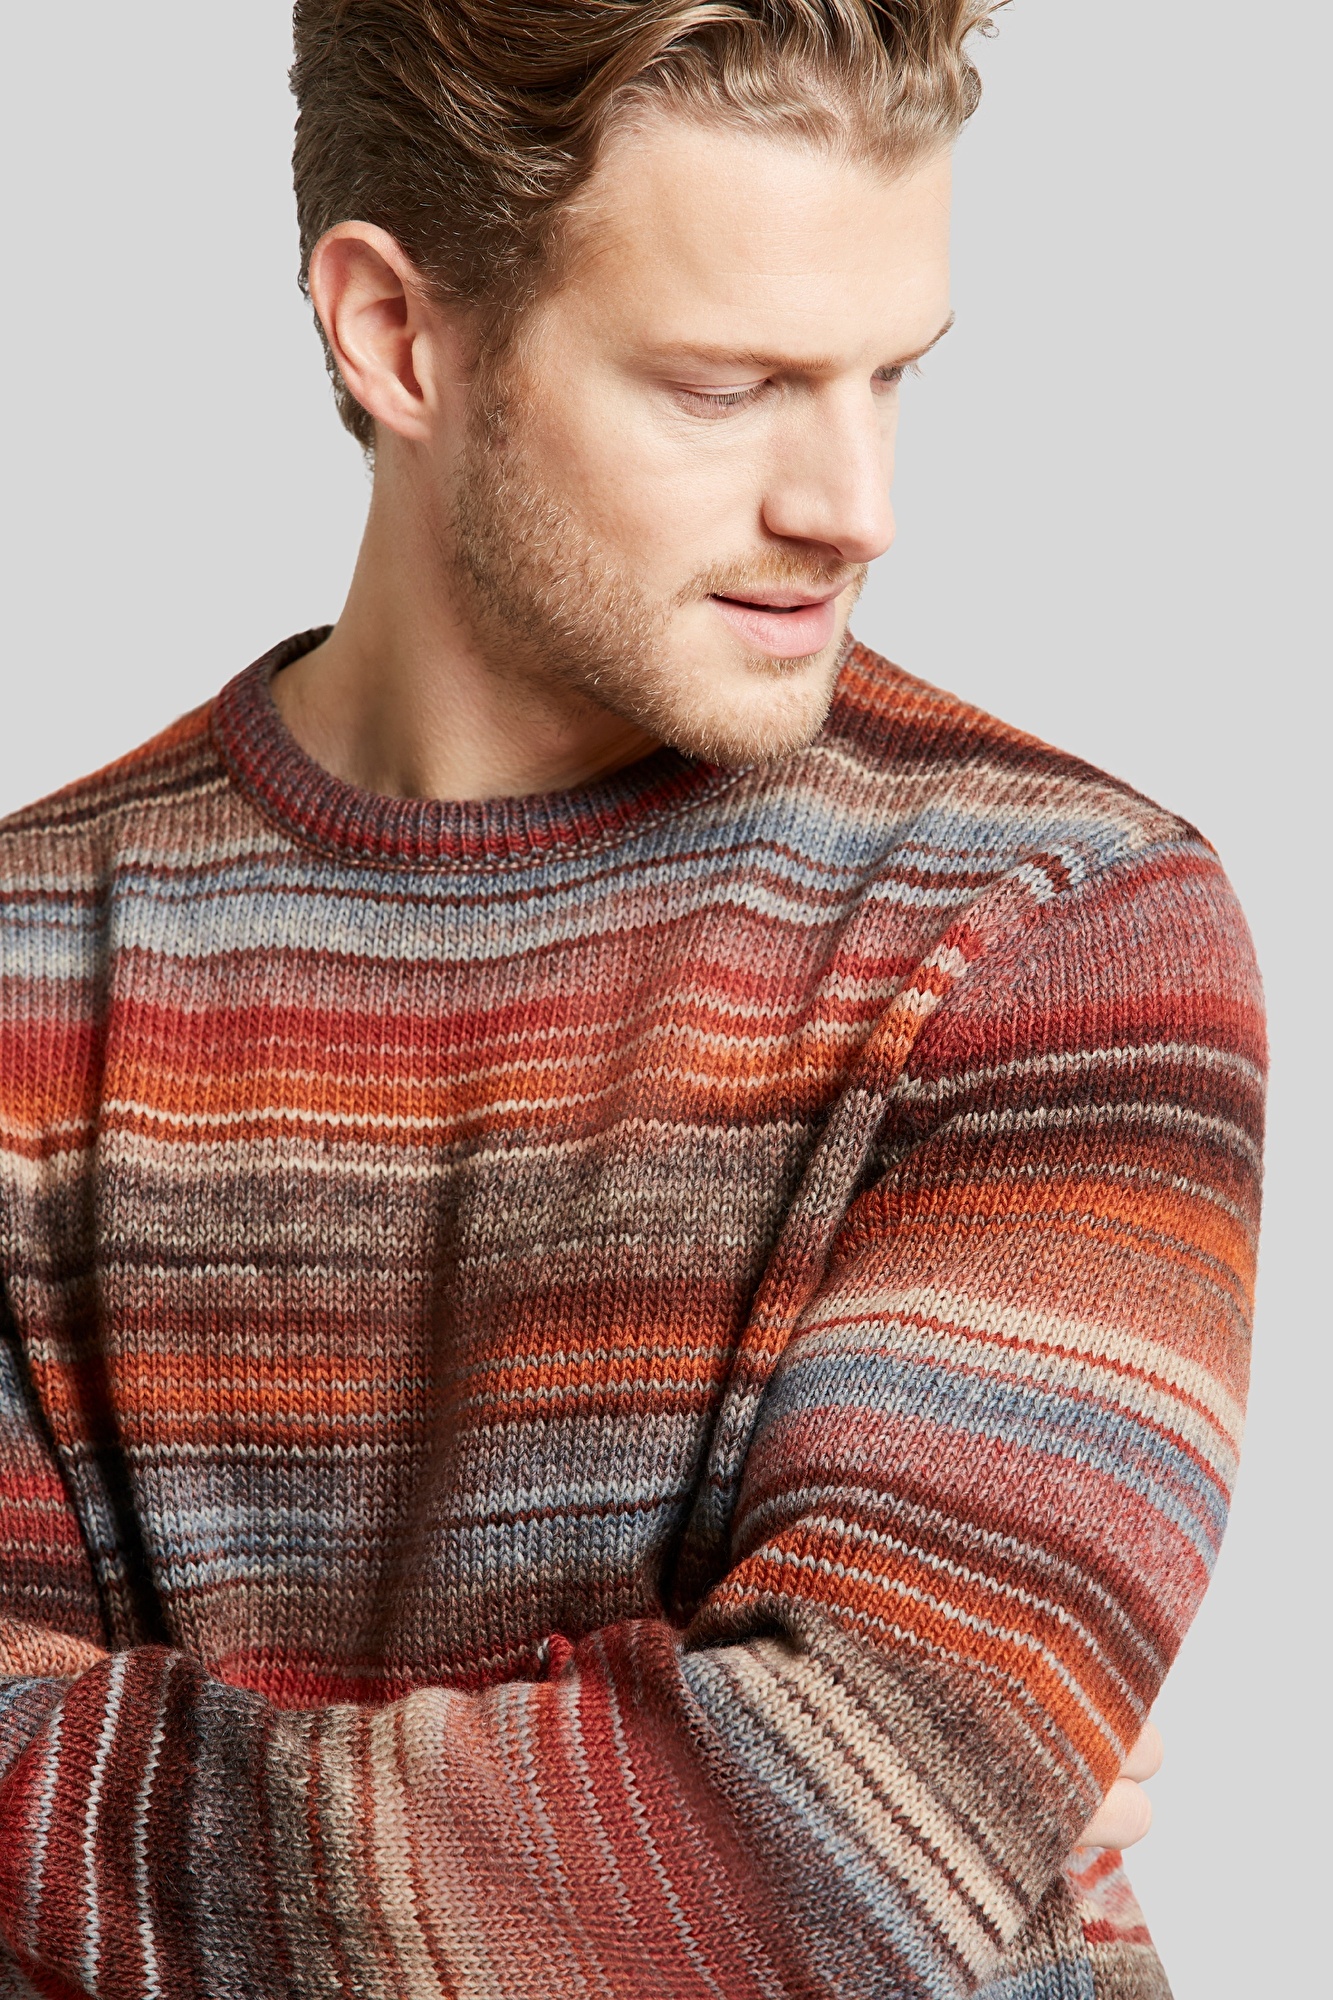 Multicolor-Farbverlauf in rost mit Pullover